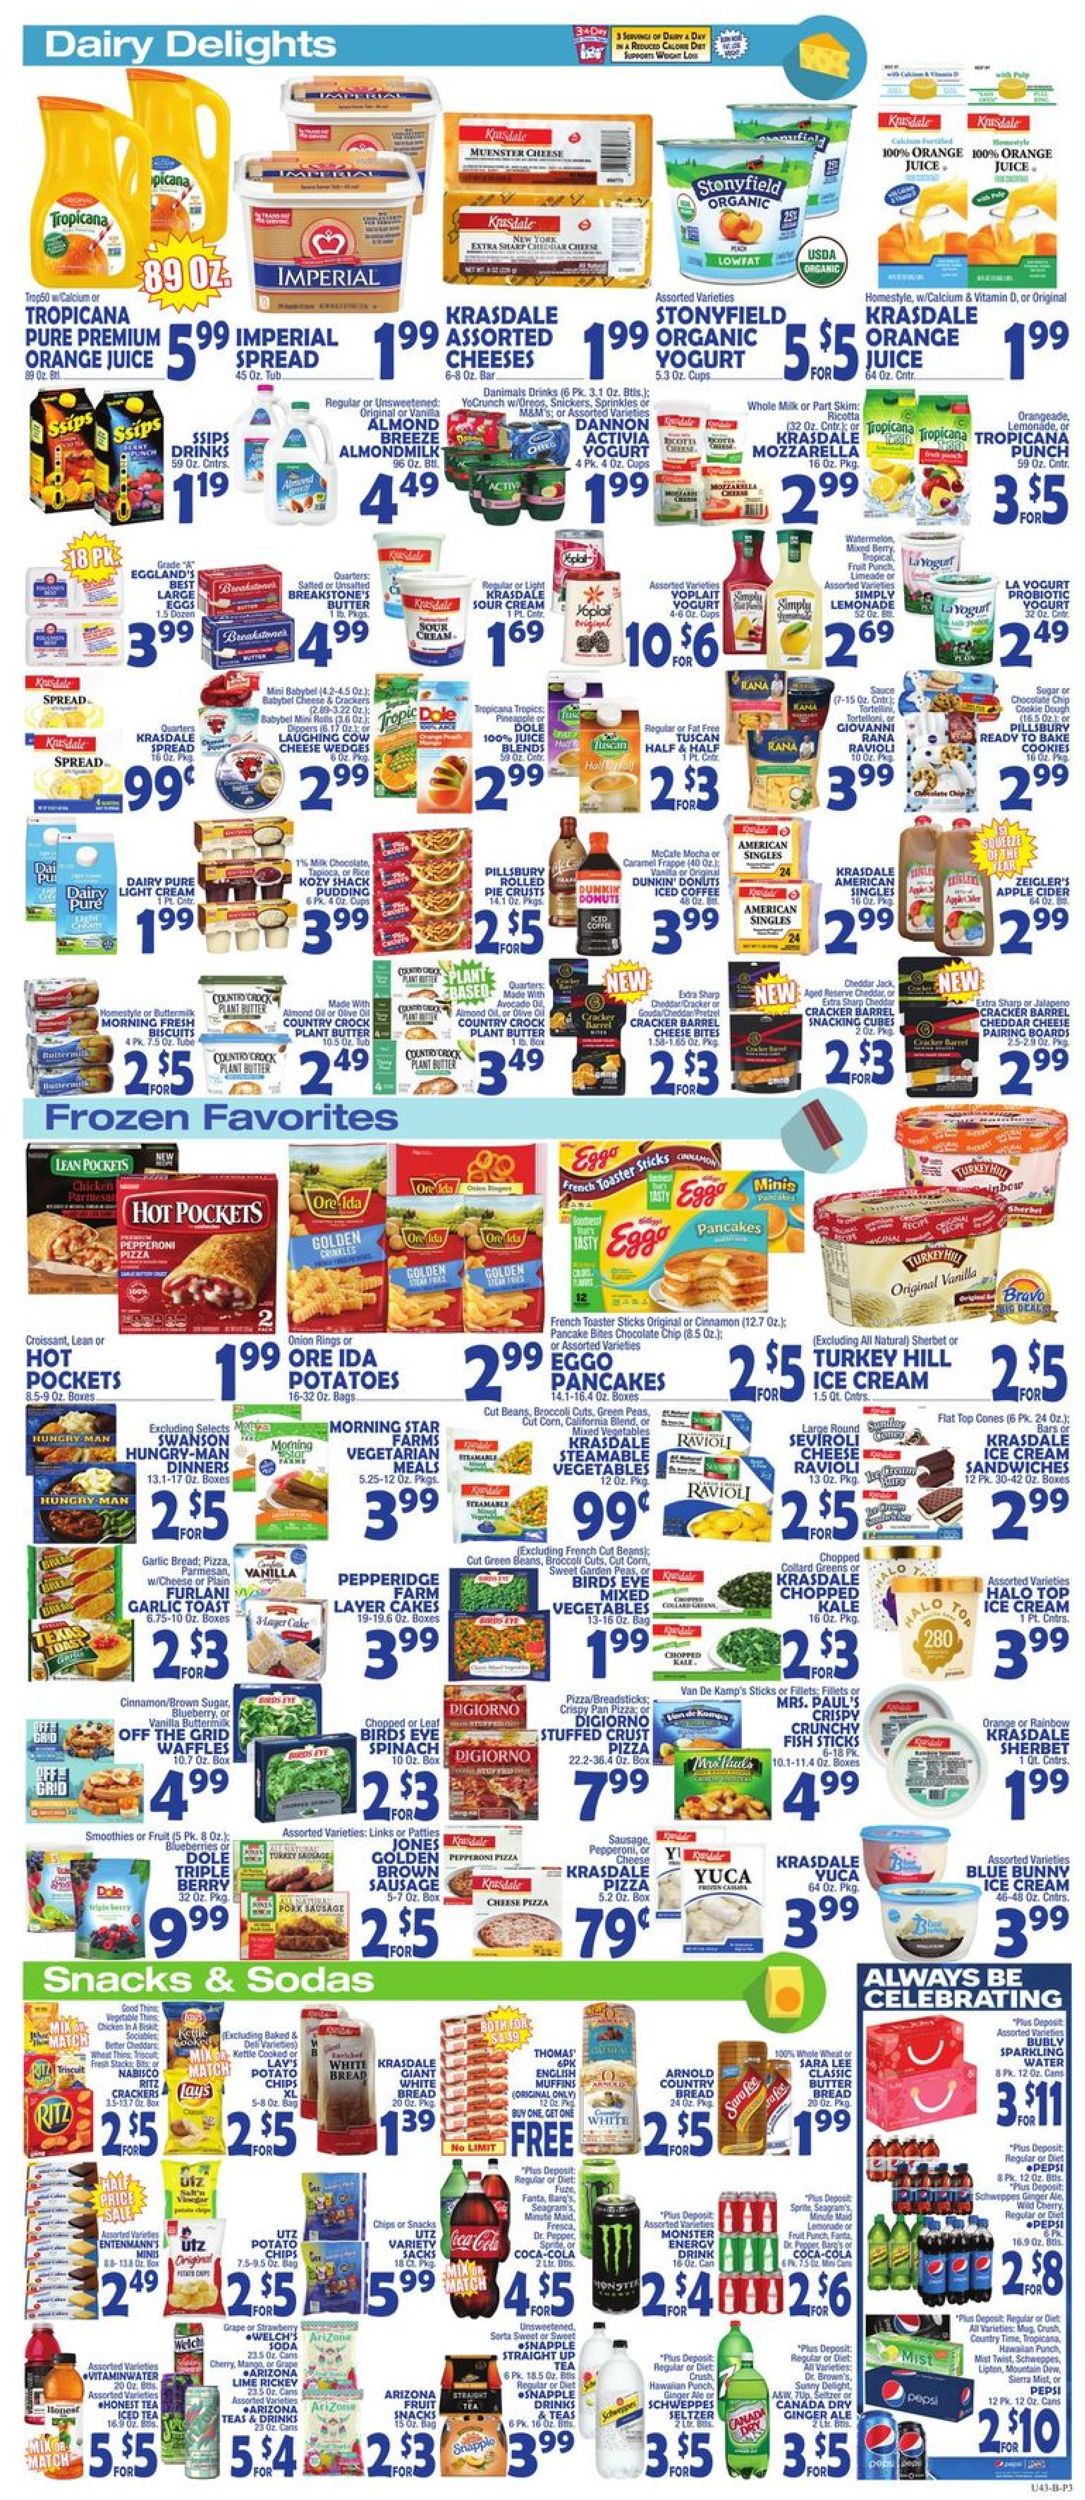 Catalogue Bravo Supermarkets from 10/25/2019